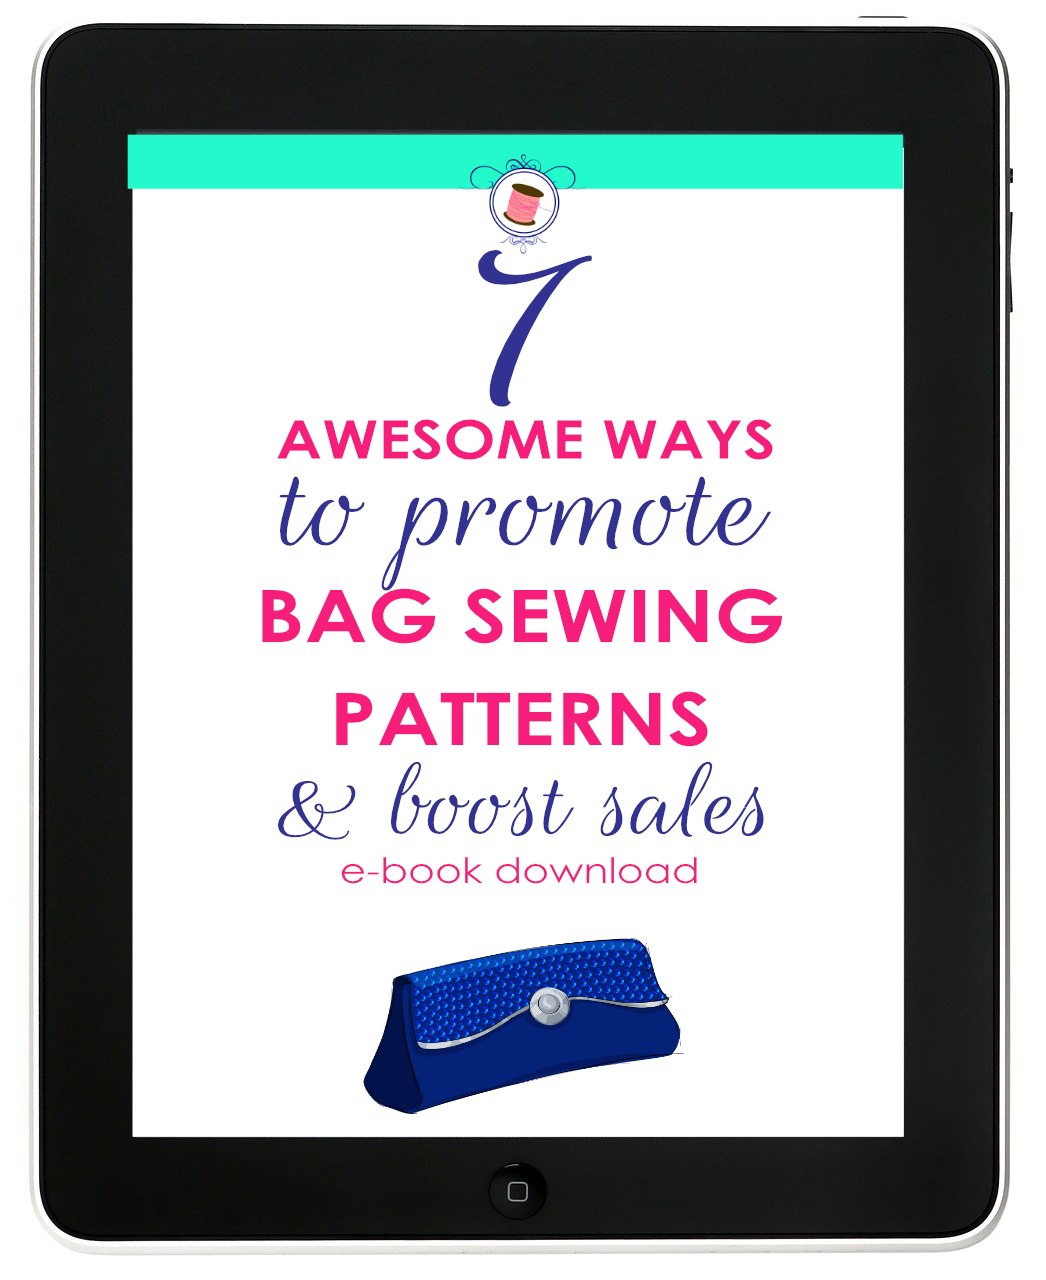 bag sewing patterns | handbag patterns | bag pattern business | purse patterns | tote sewing patterns